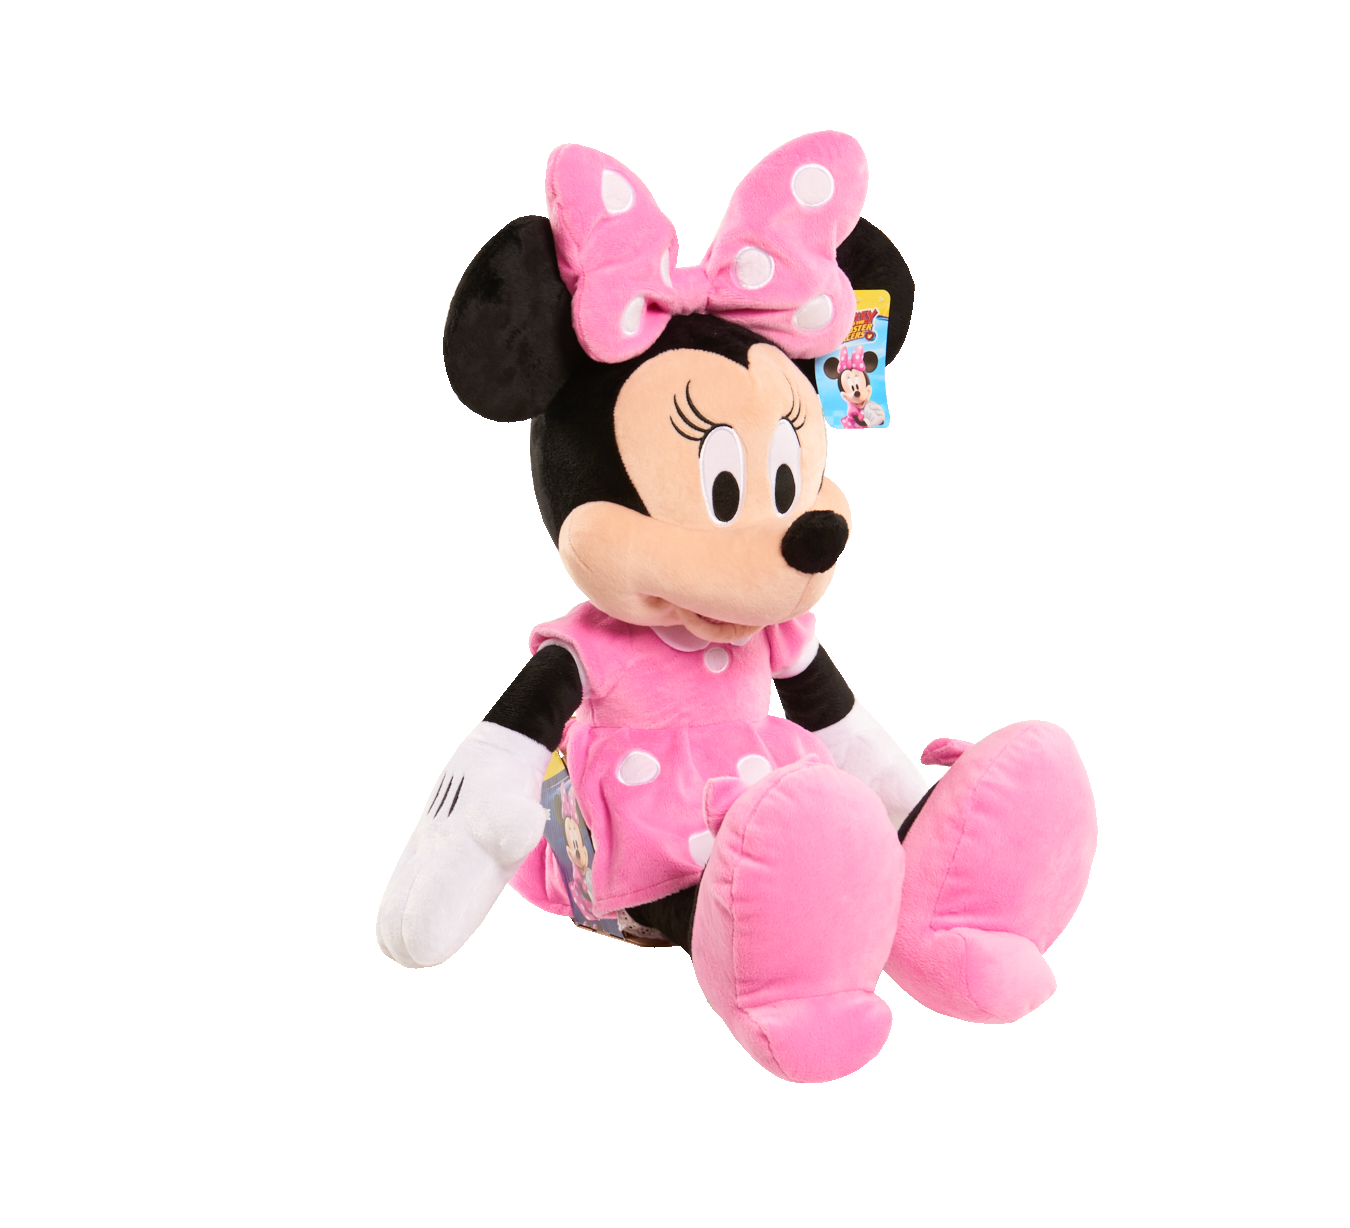 Disney Minnie Mouse Large Plush - image 3 of 4